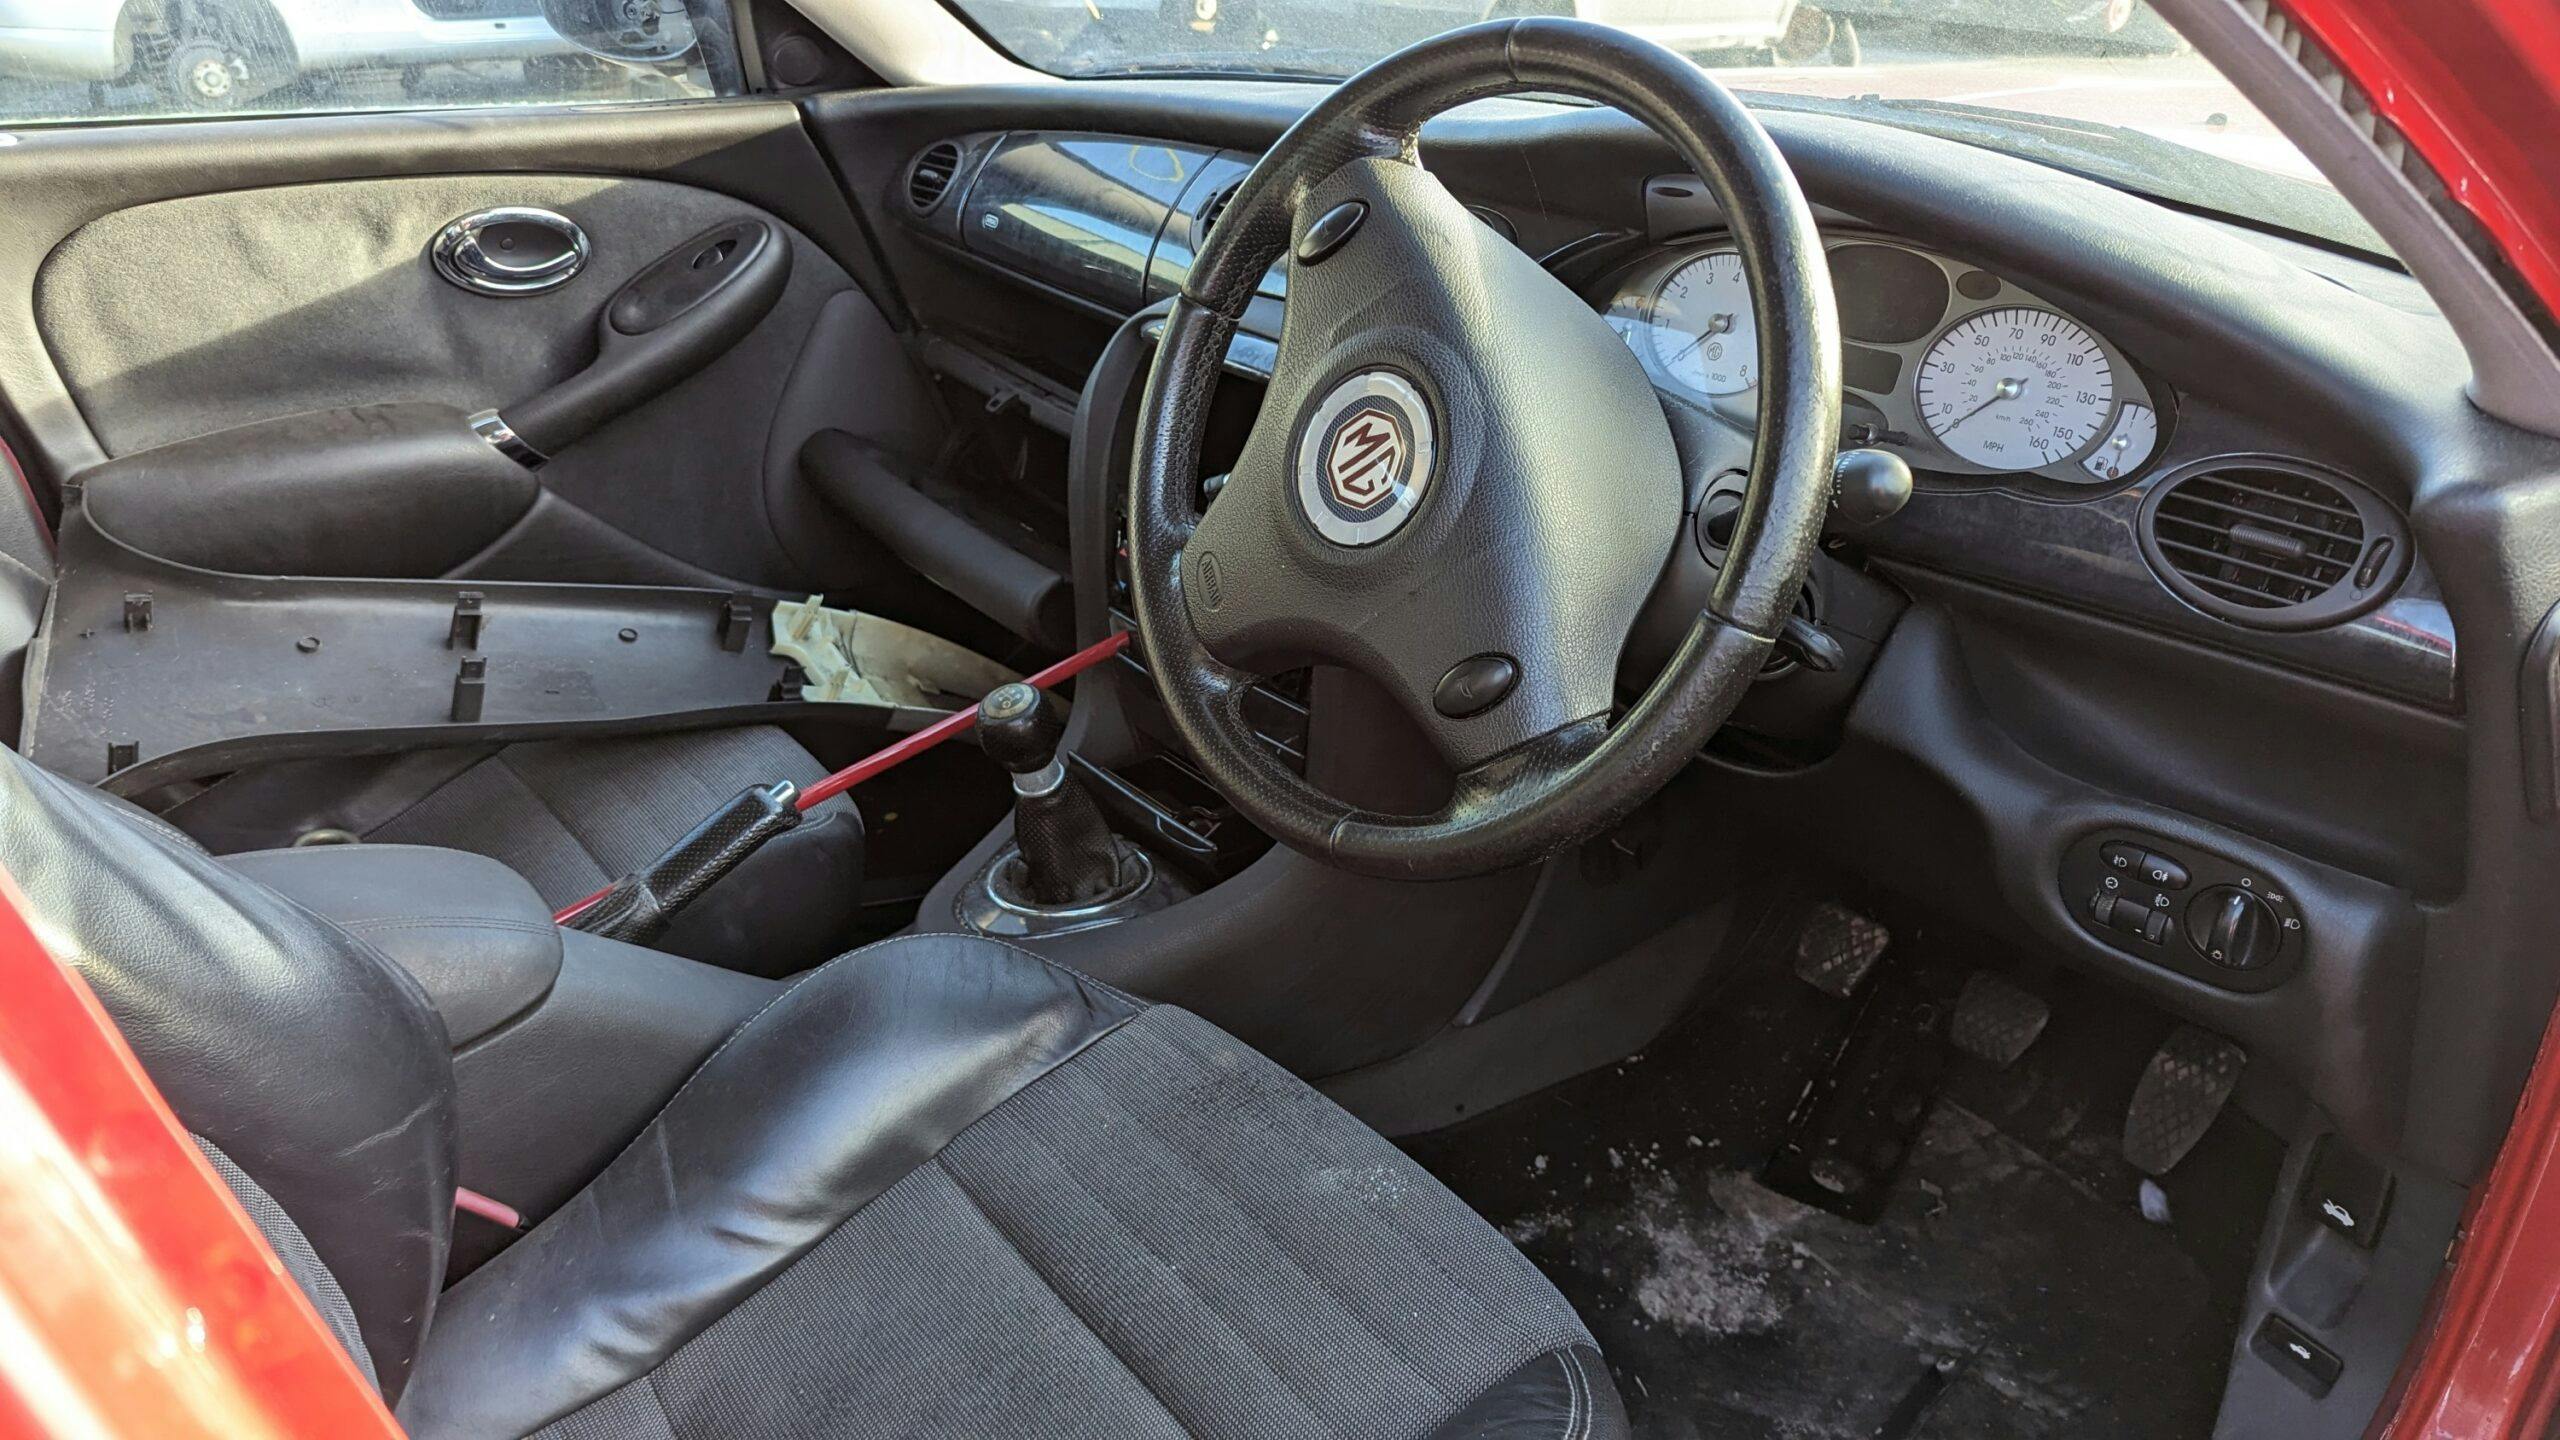 2005 MG ZT 190 interior steering wheel